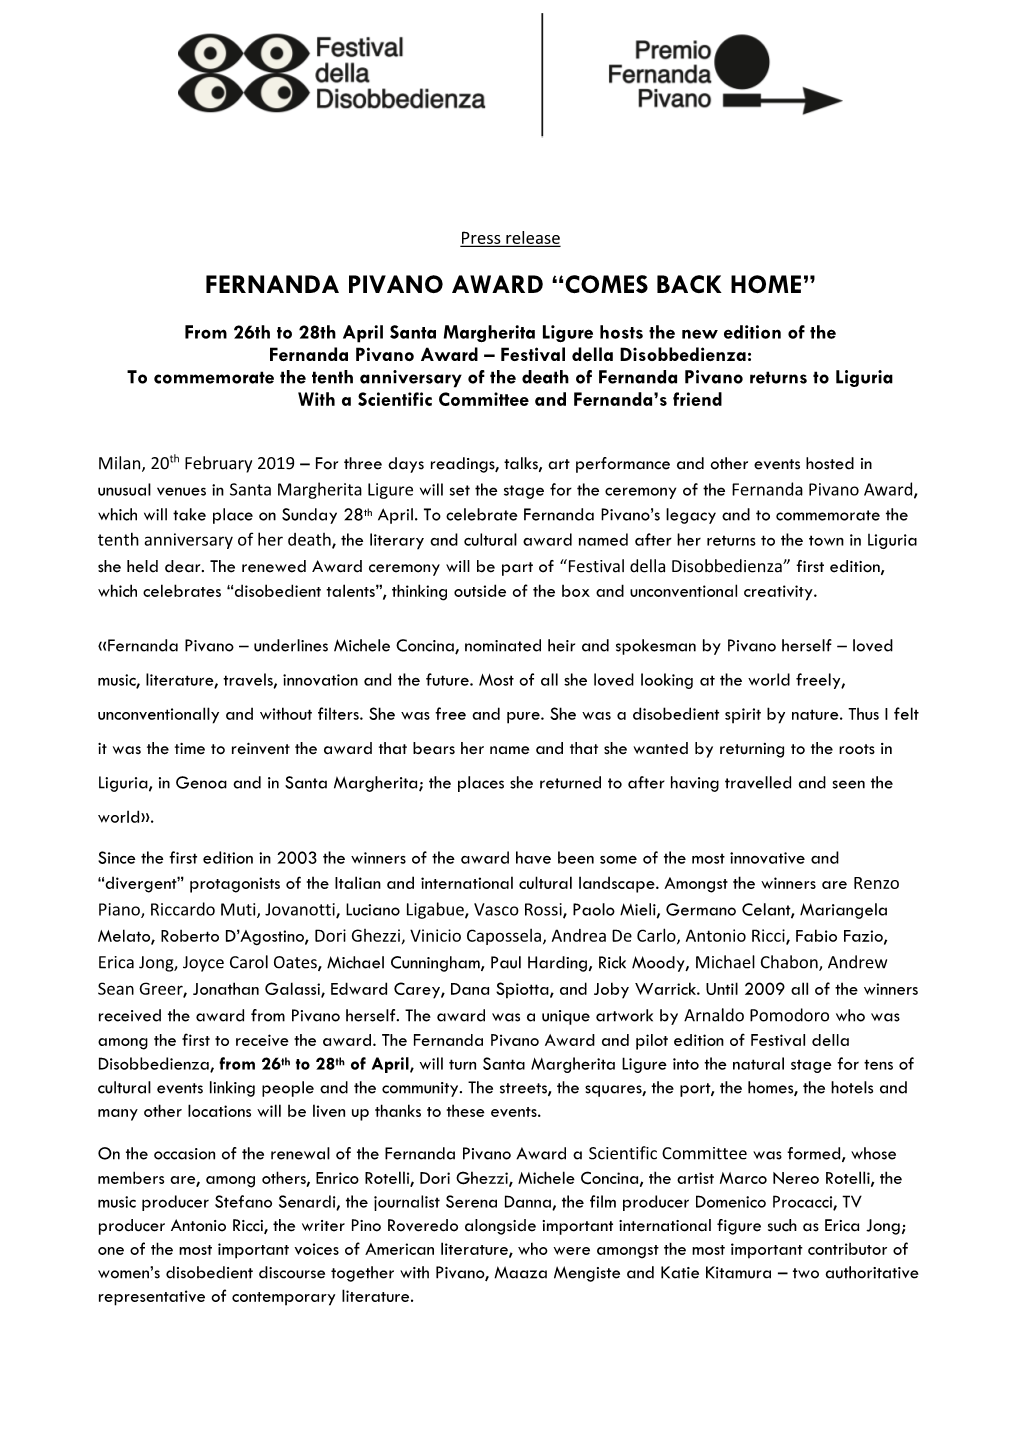 Fernanda Pivano Award “Comes Back Home”